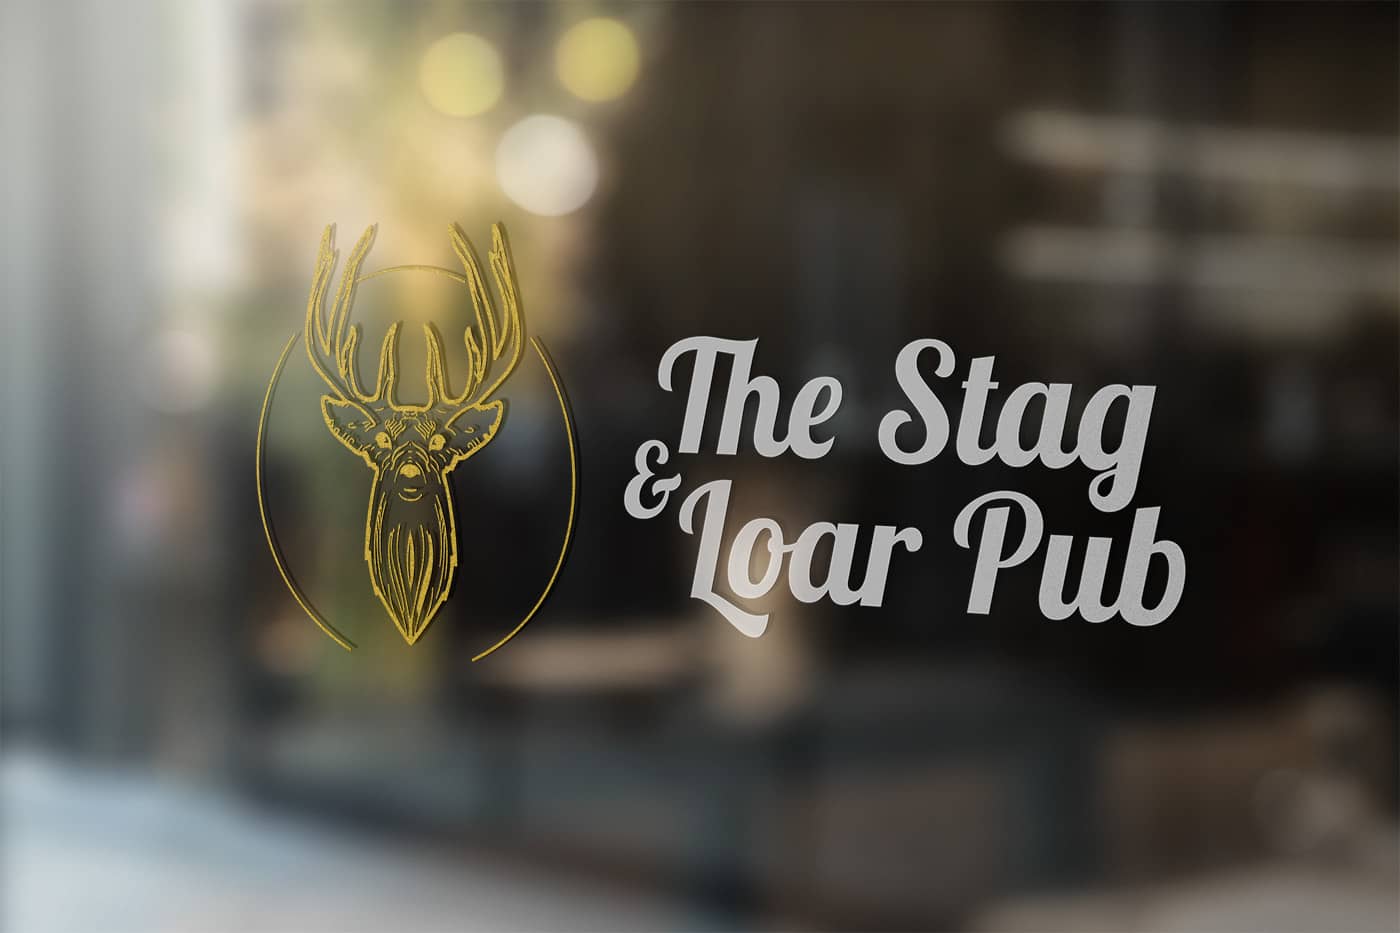 Stratégie Stag & Loar Pub